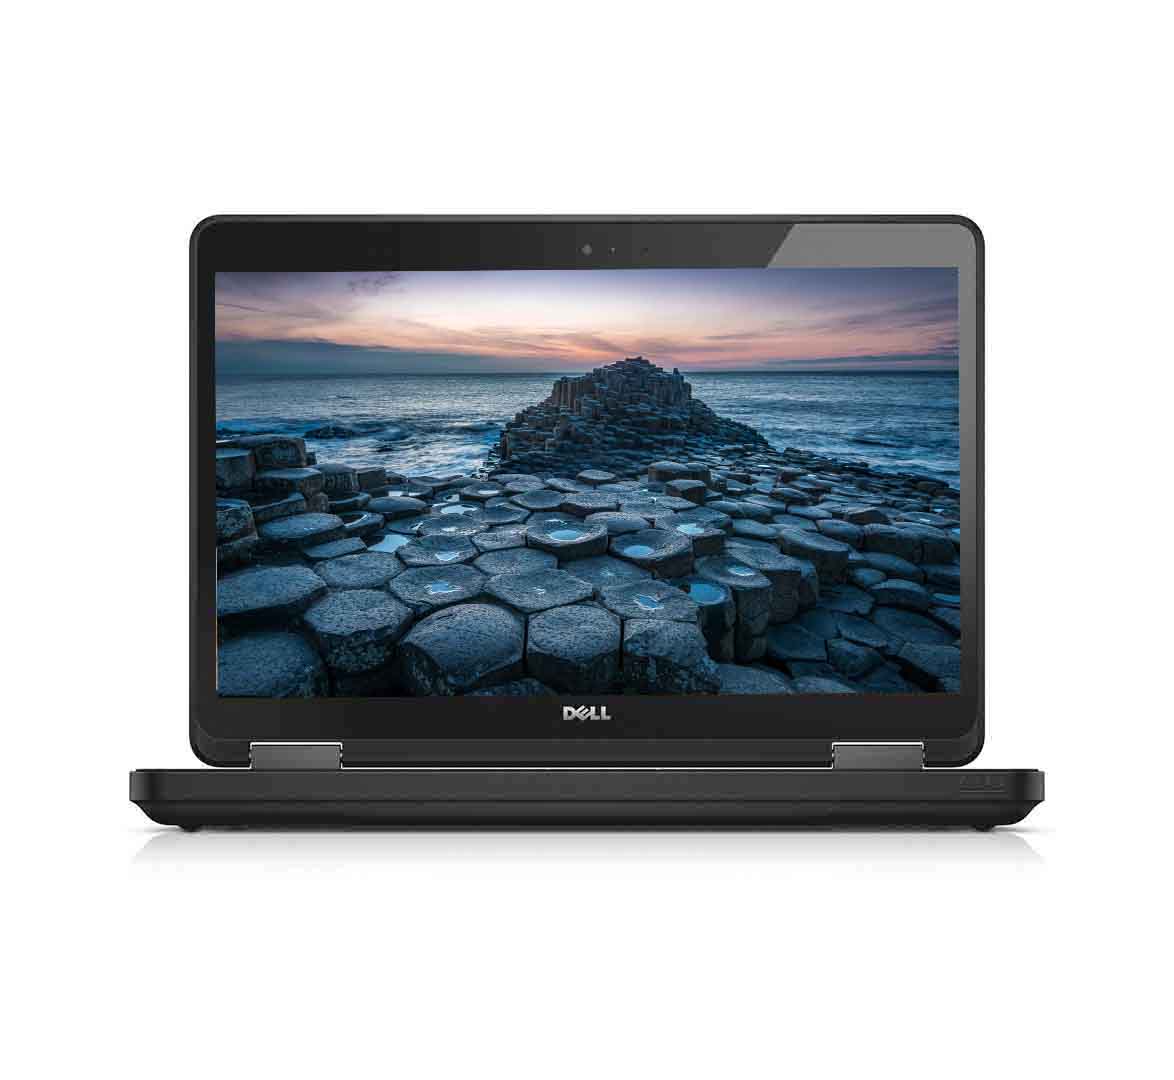 Dell Latitude 5550 Business Laptop, Intel Core i3-5th Generation CPU, 4GB RAM, 500GB HDD, 15.6 inch Display, Windows 10 Pro, Refurbished Laptop